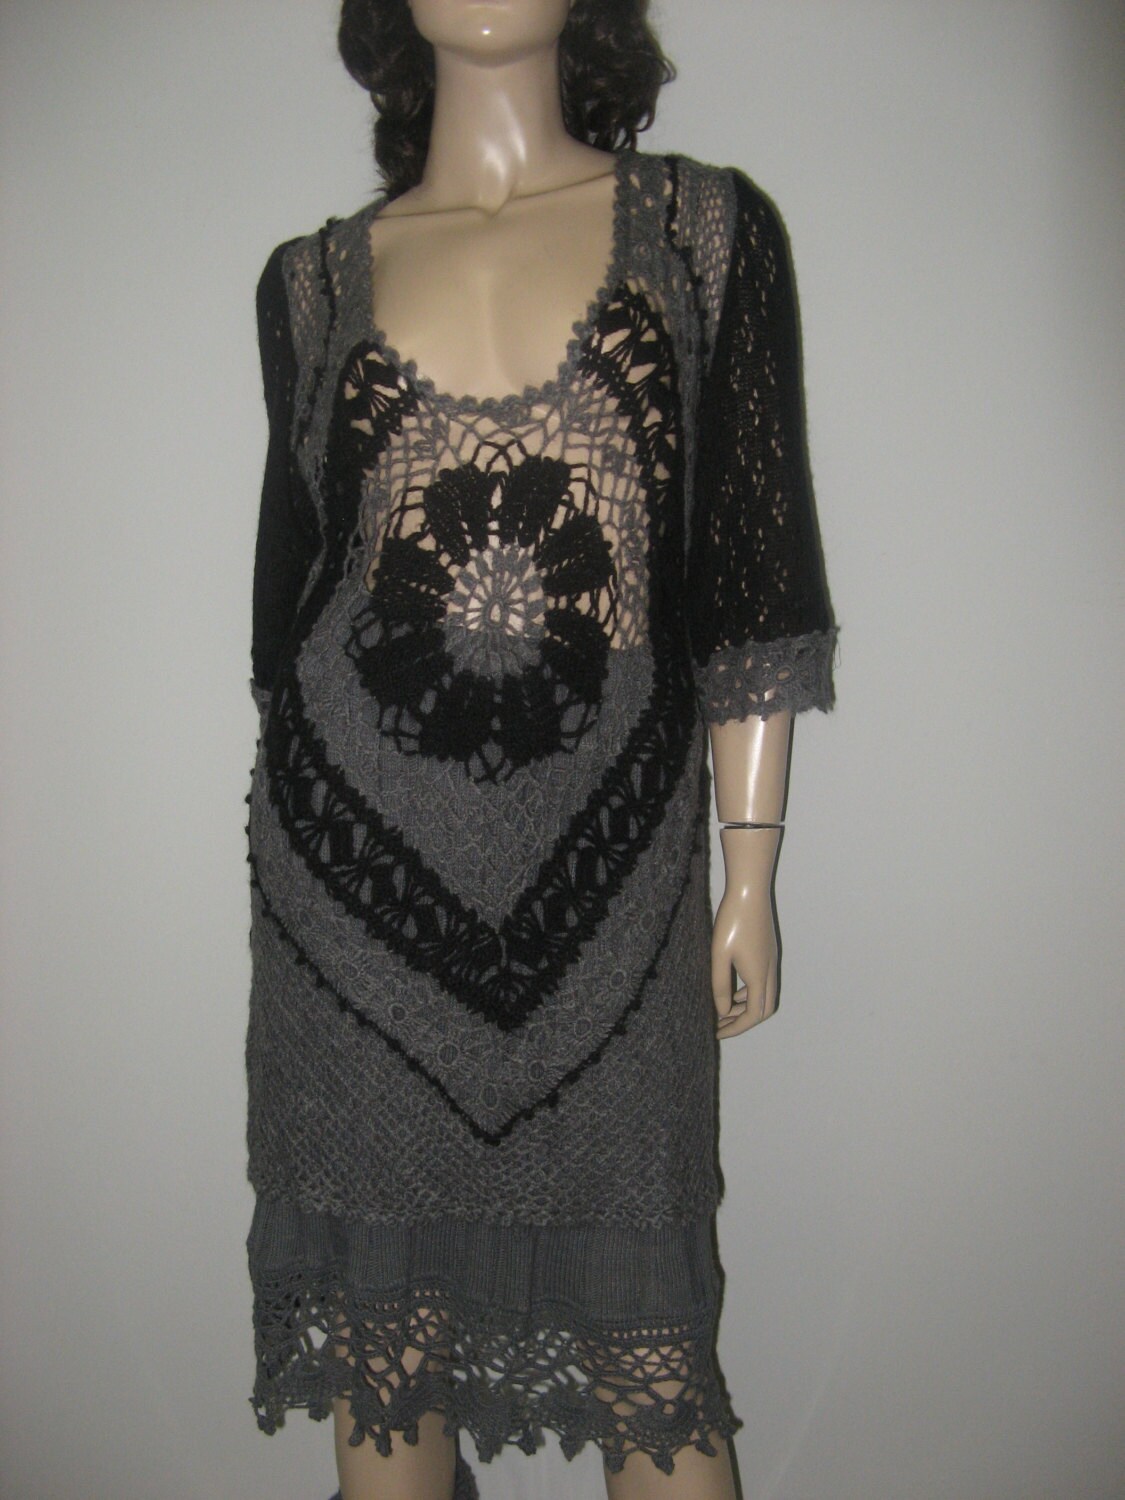 Knitted Gray-black Tunic Woolen Alpaca TUNIC Crochet Lacy - Etsy